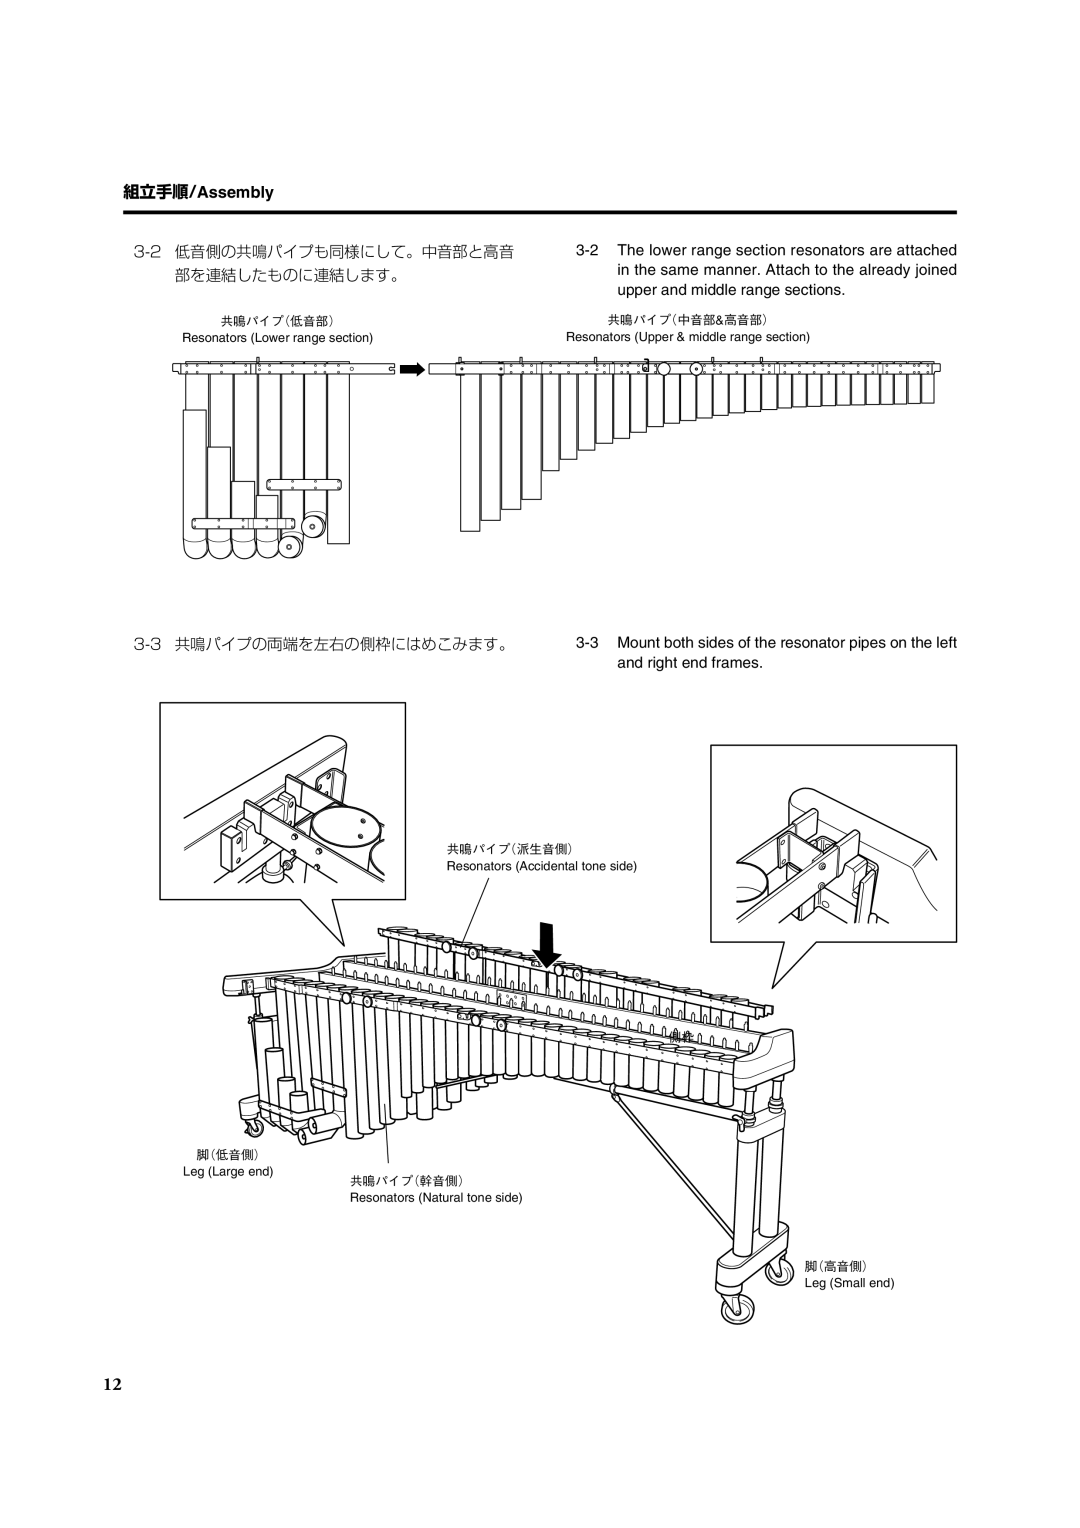 Yamaha Concert Marimba, YM6100 owner manual 3-2 低音側の共鳴パイプも同様にして。中音部と高音 部を連結したものに連結します。, 3-3 共鳴パイプの両端を左右の側枠にはめこみます。 